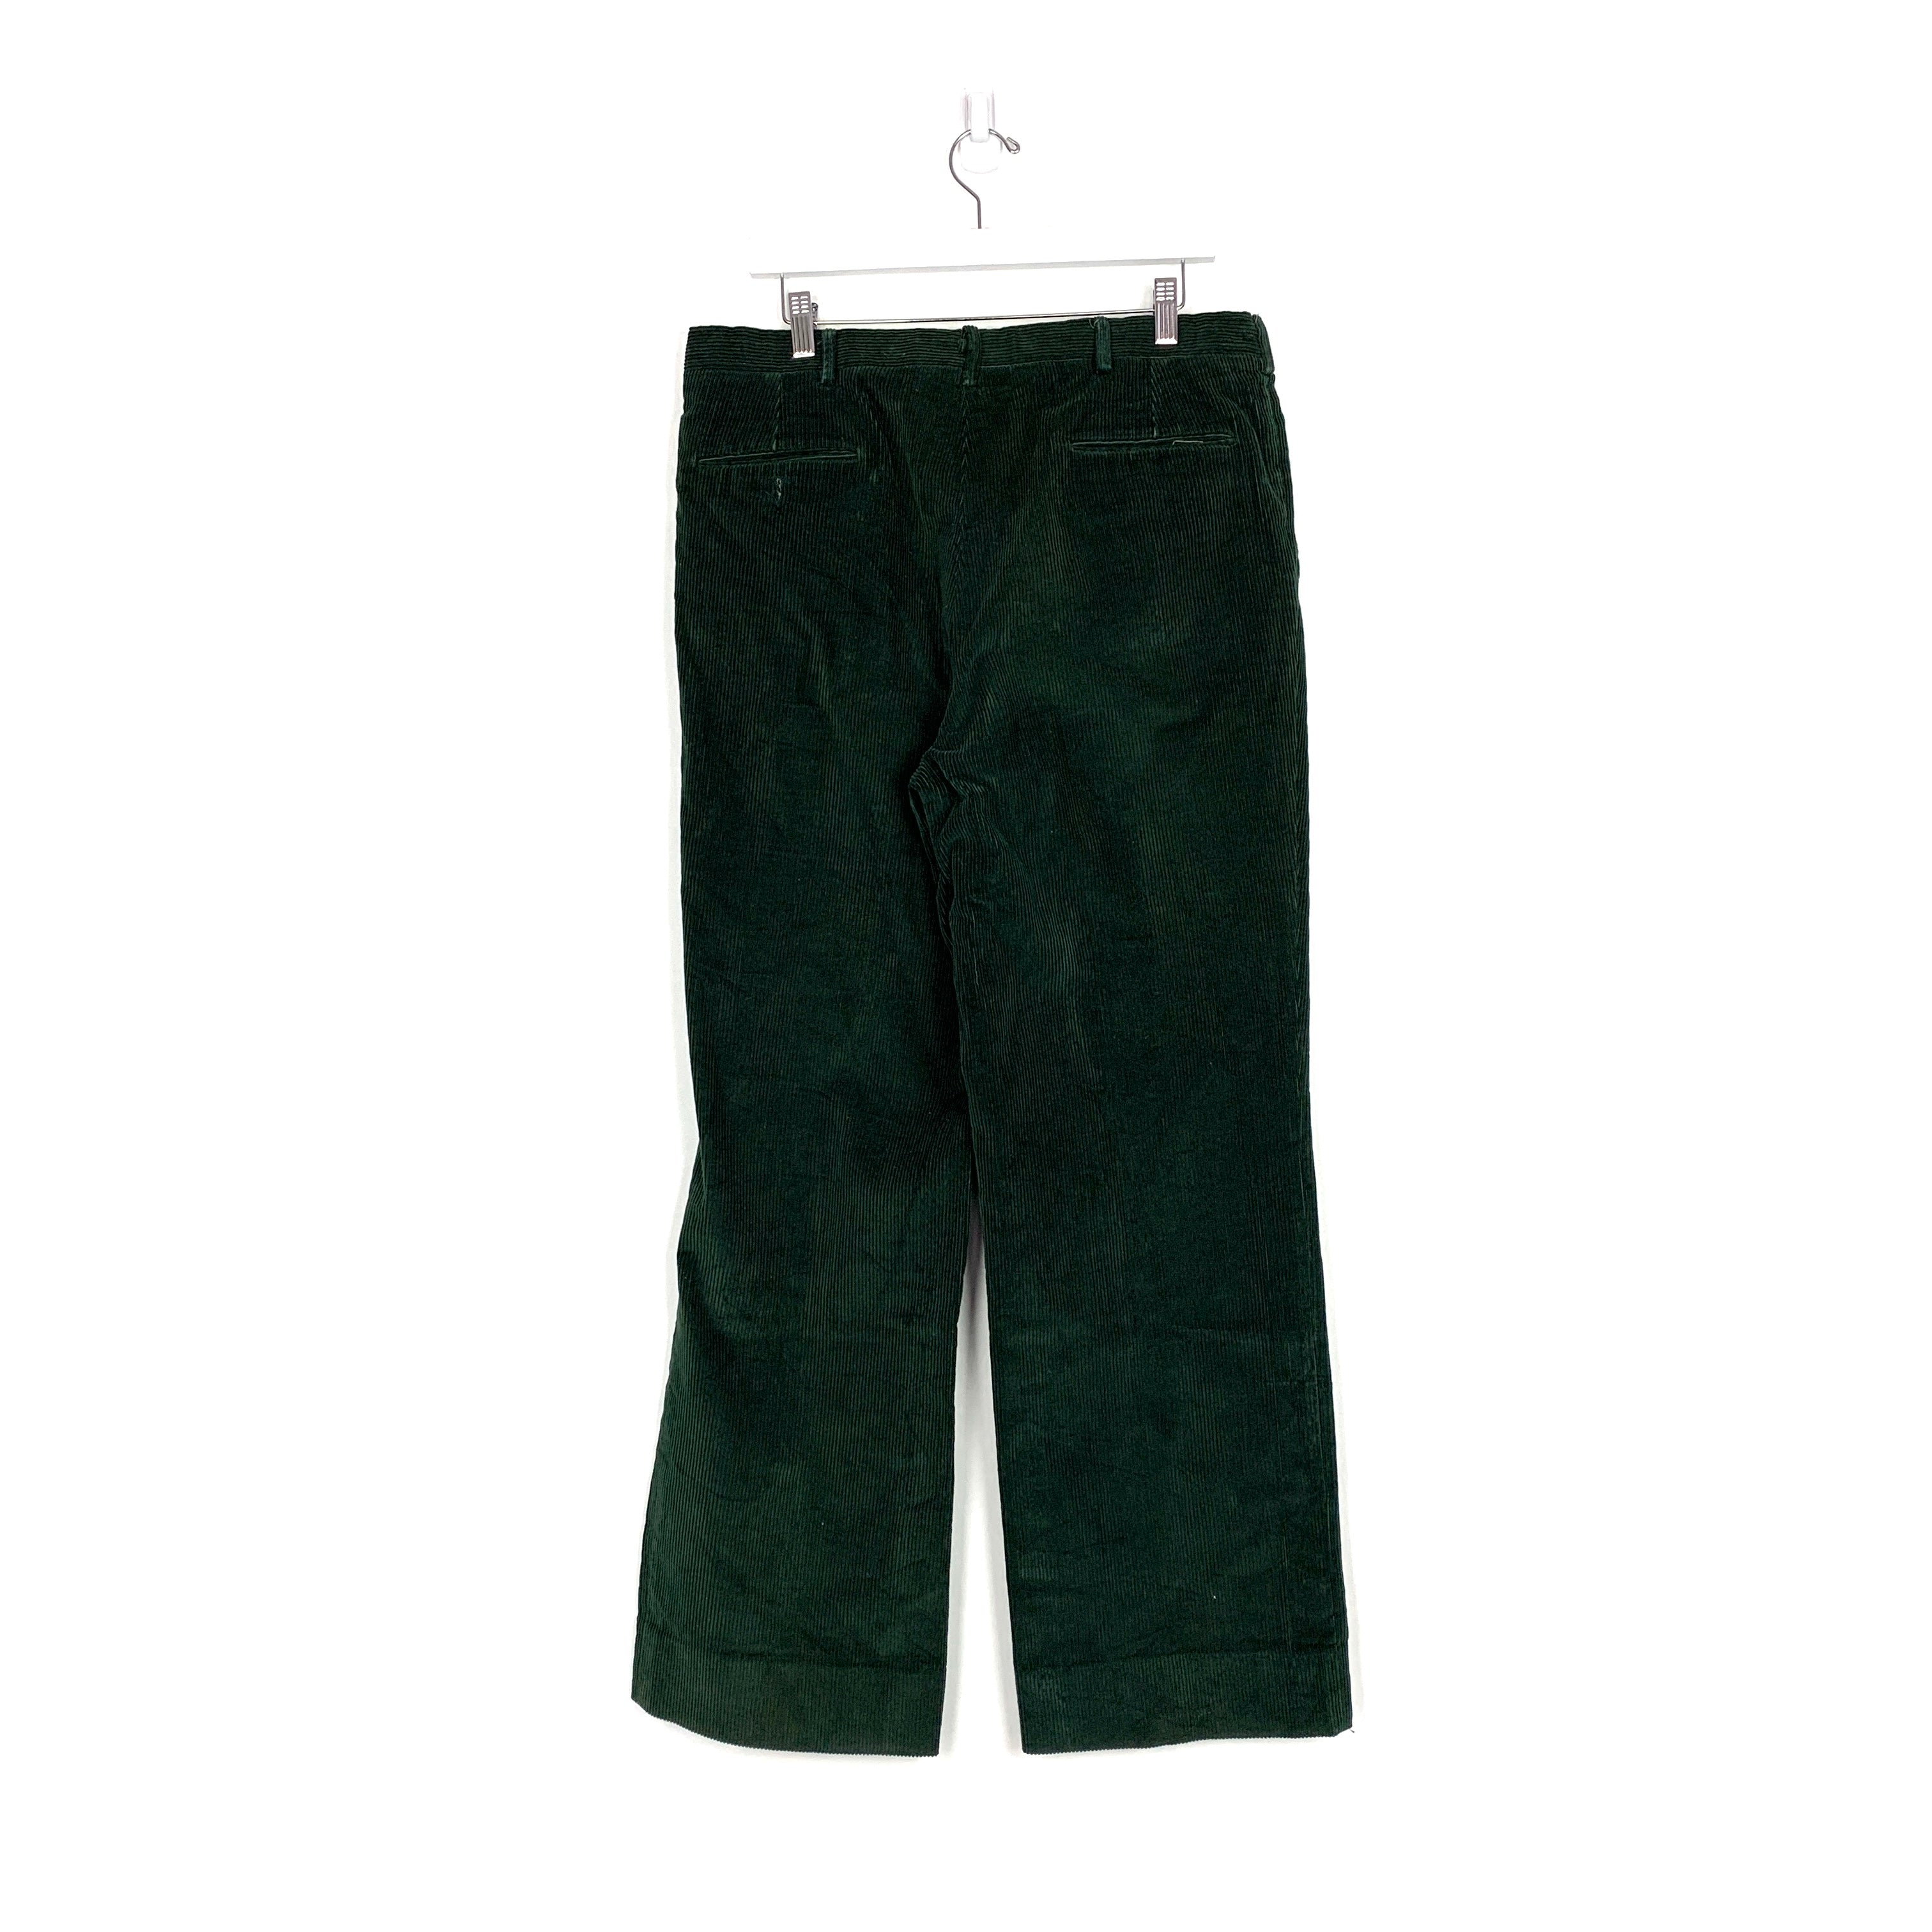 Vintage Polo Ralph Lauren Corduroy Pants - Men's 36/31